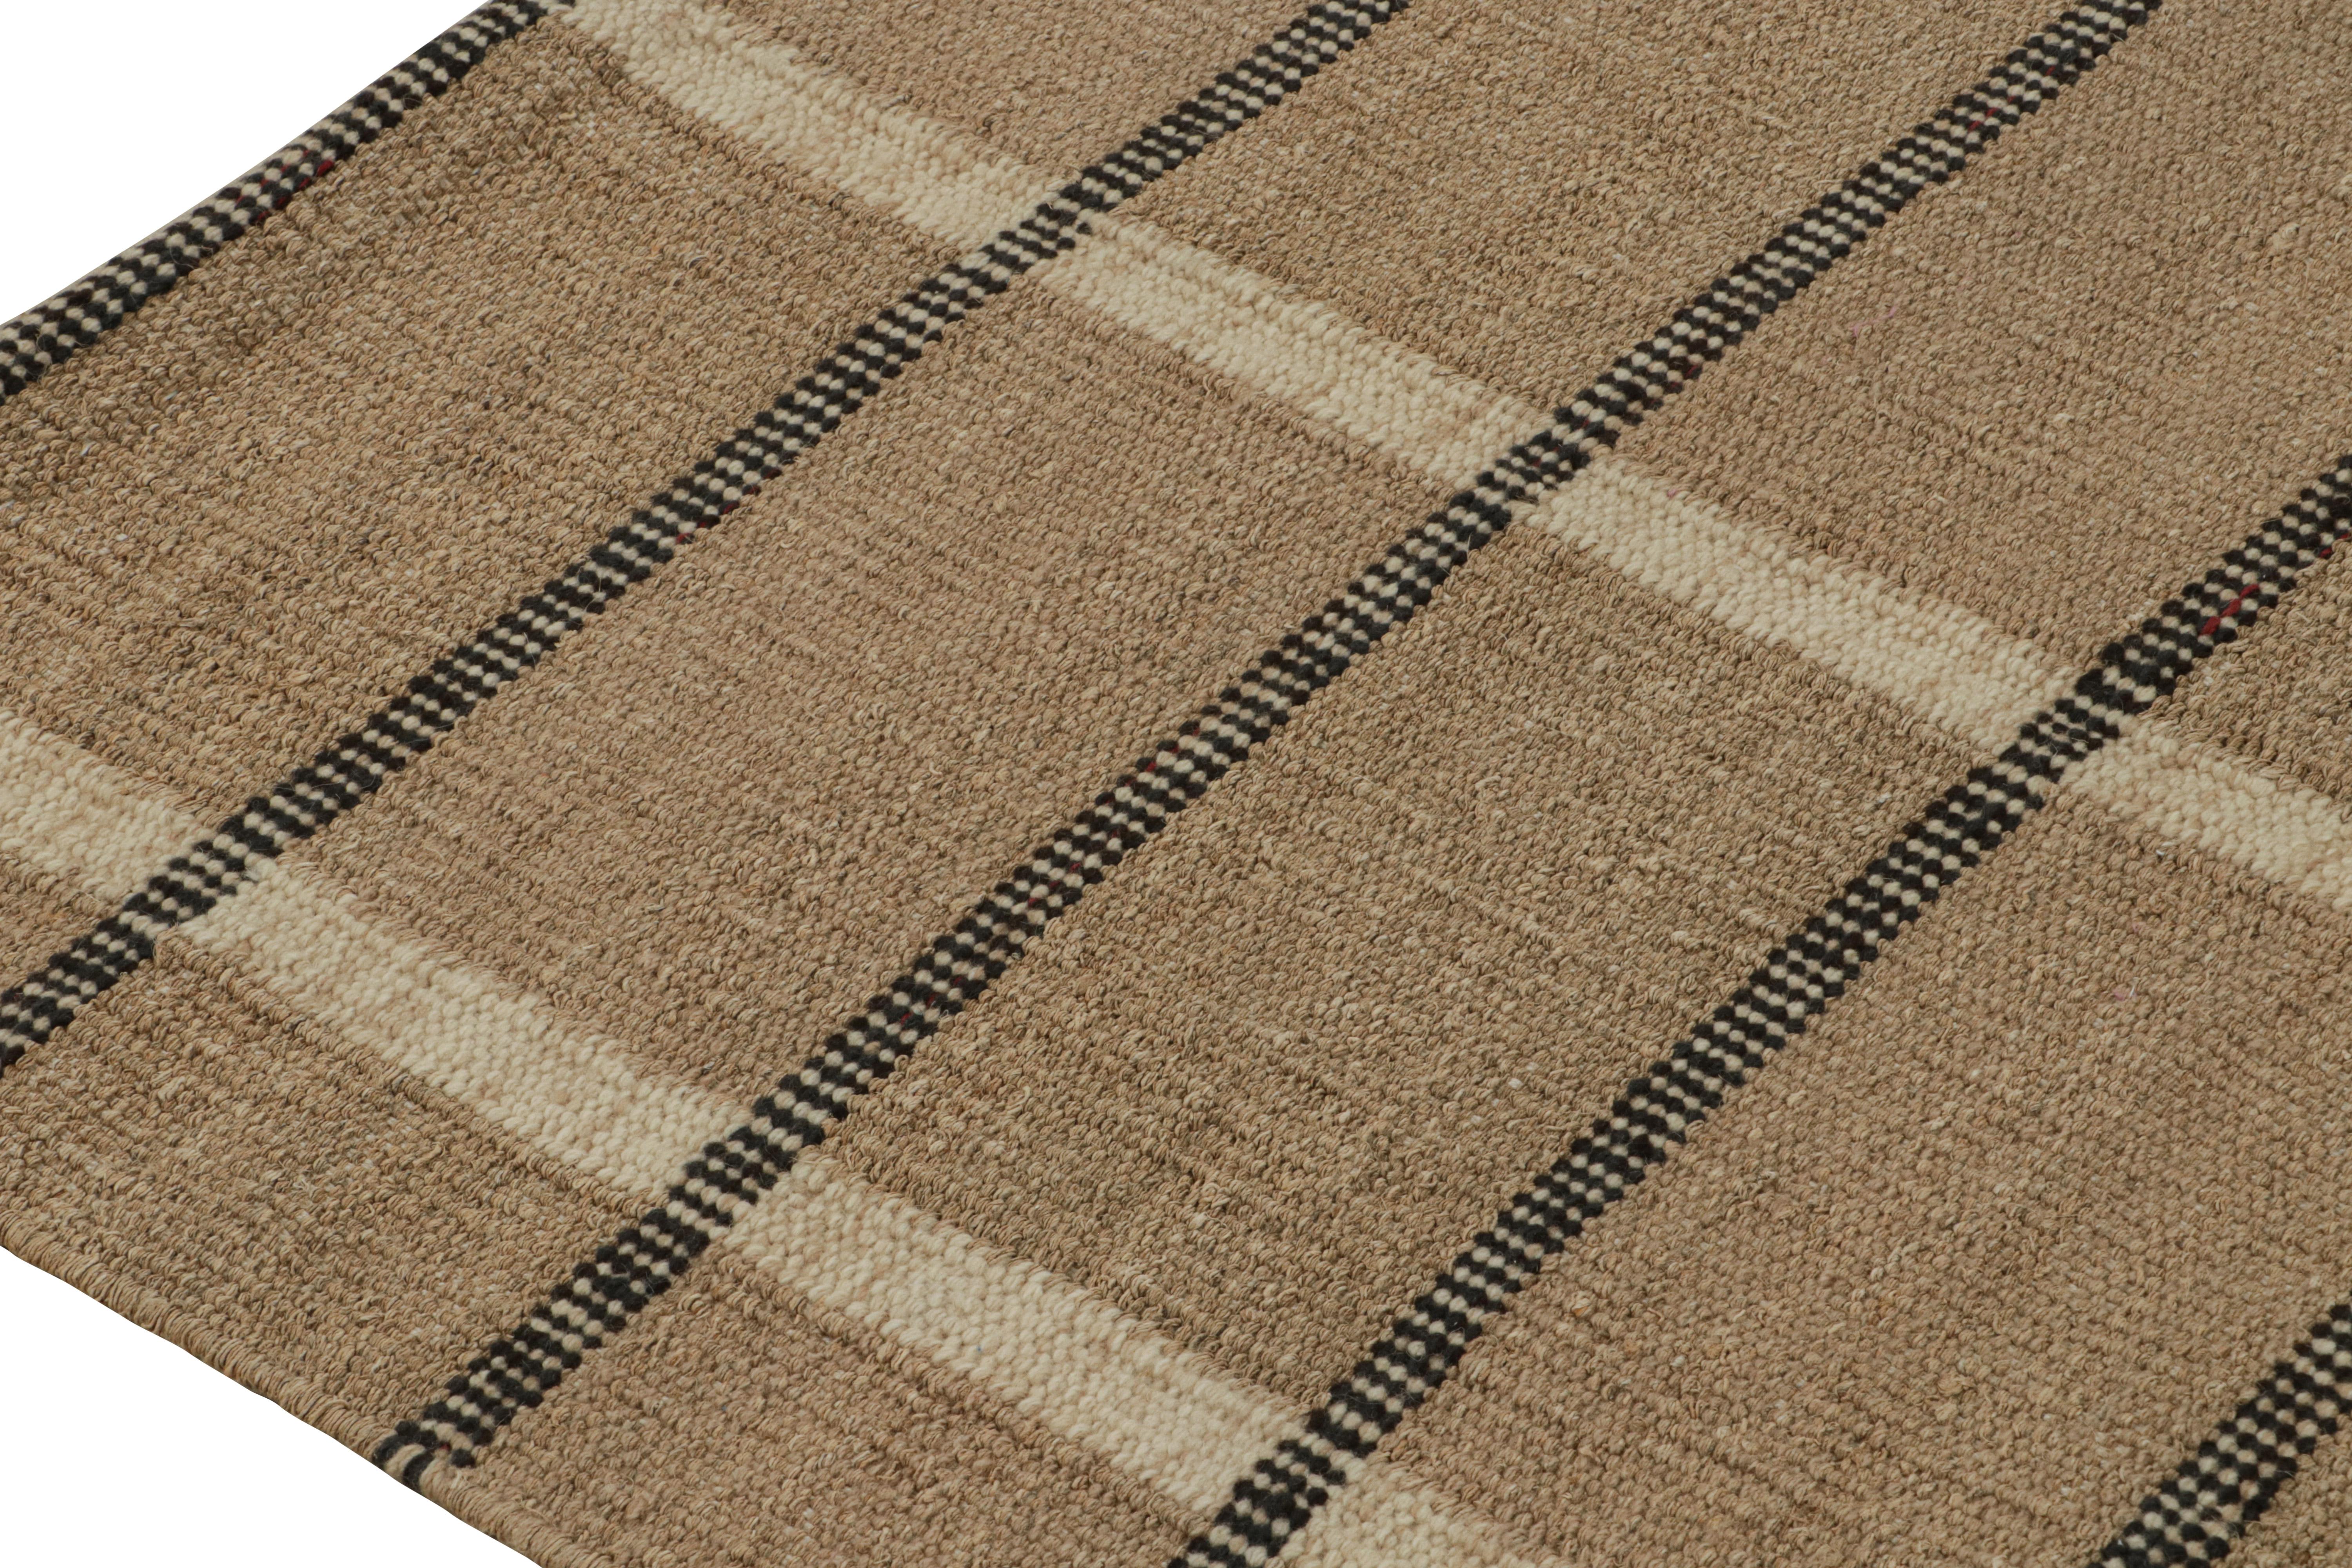 Hand-Woven Rug & Kilim’s Scandinavian Style Kilim runner & Hemp Rug in Beige-Brown Stripes For Sale